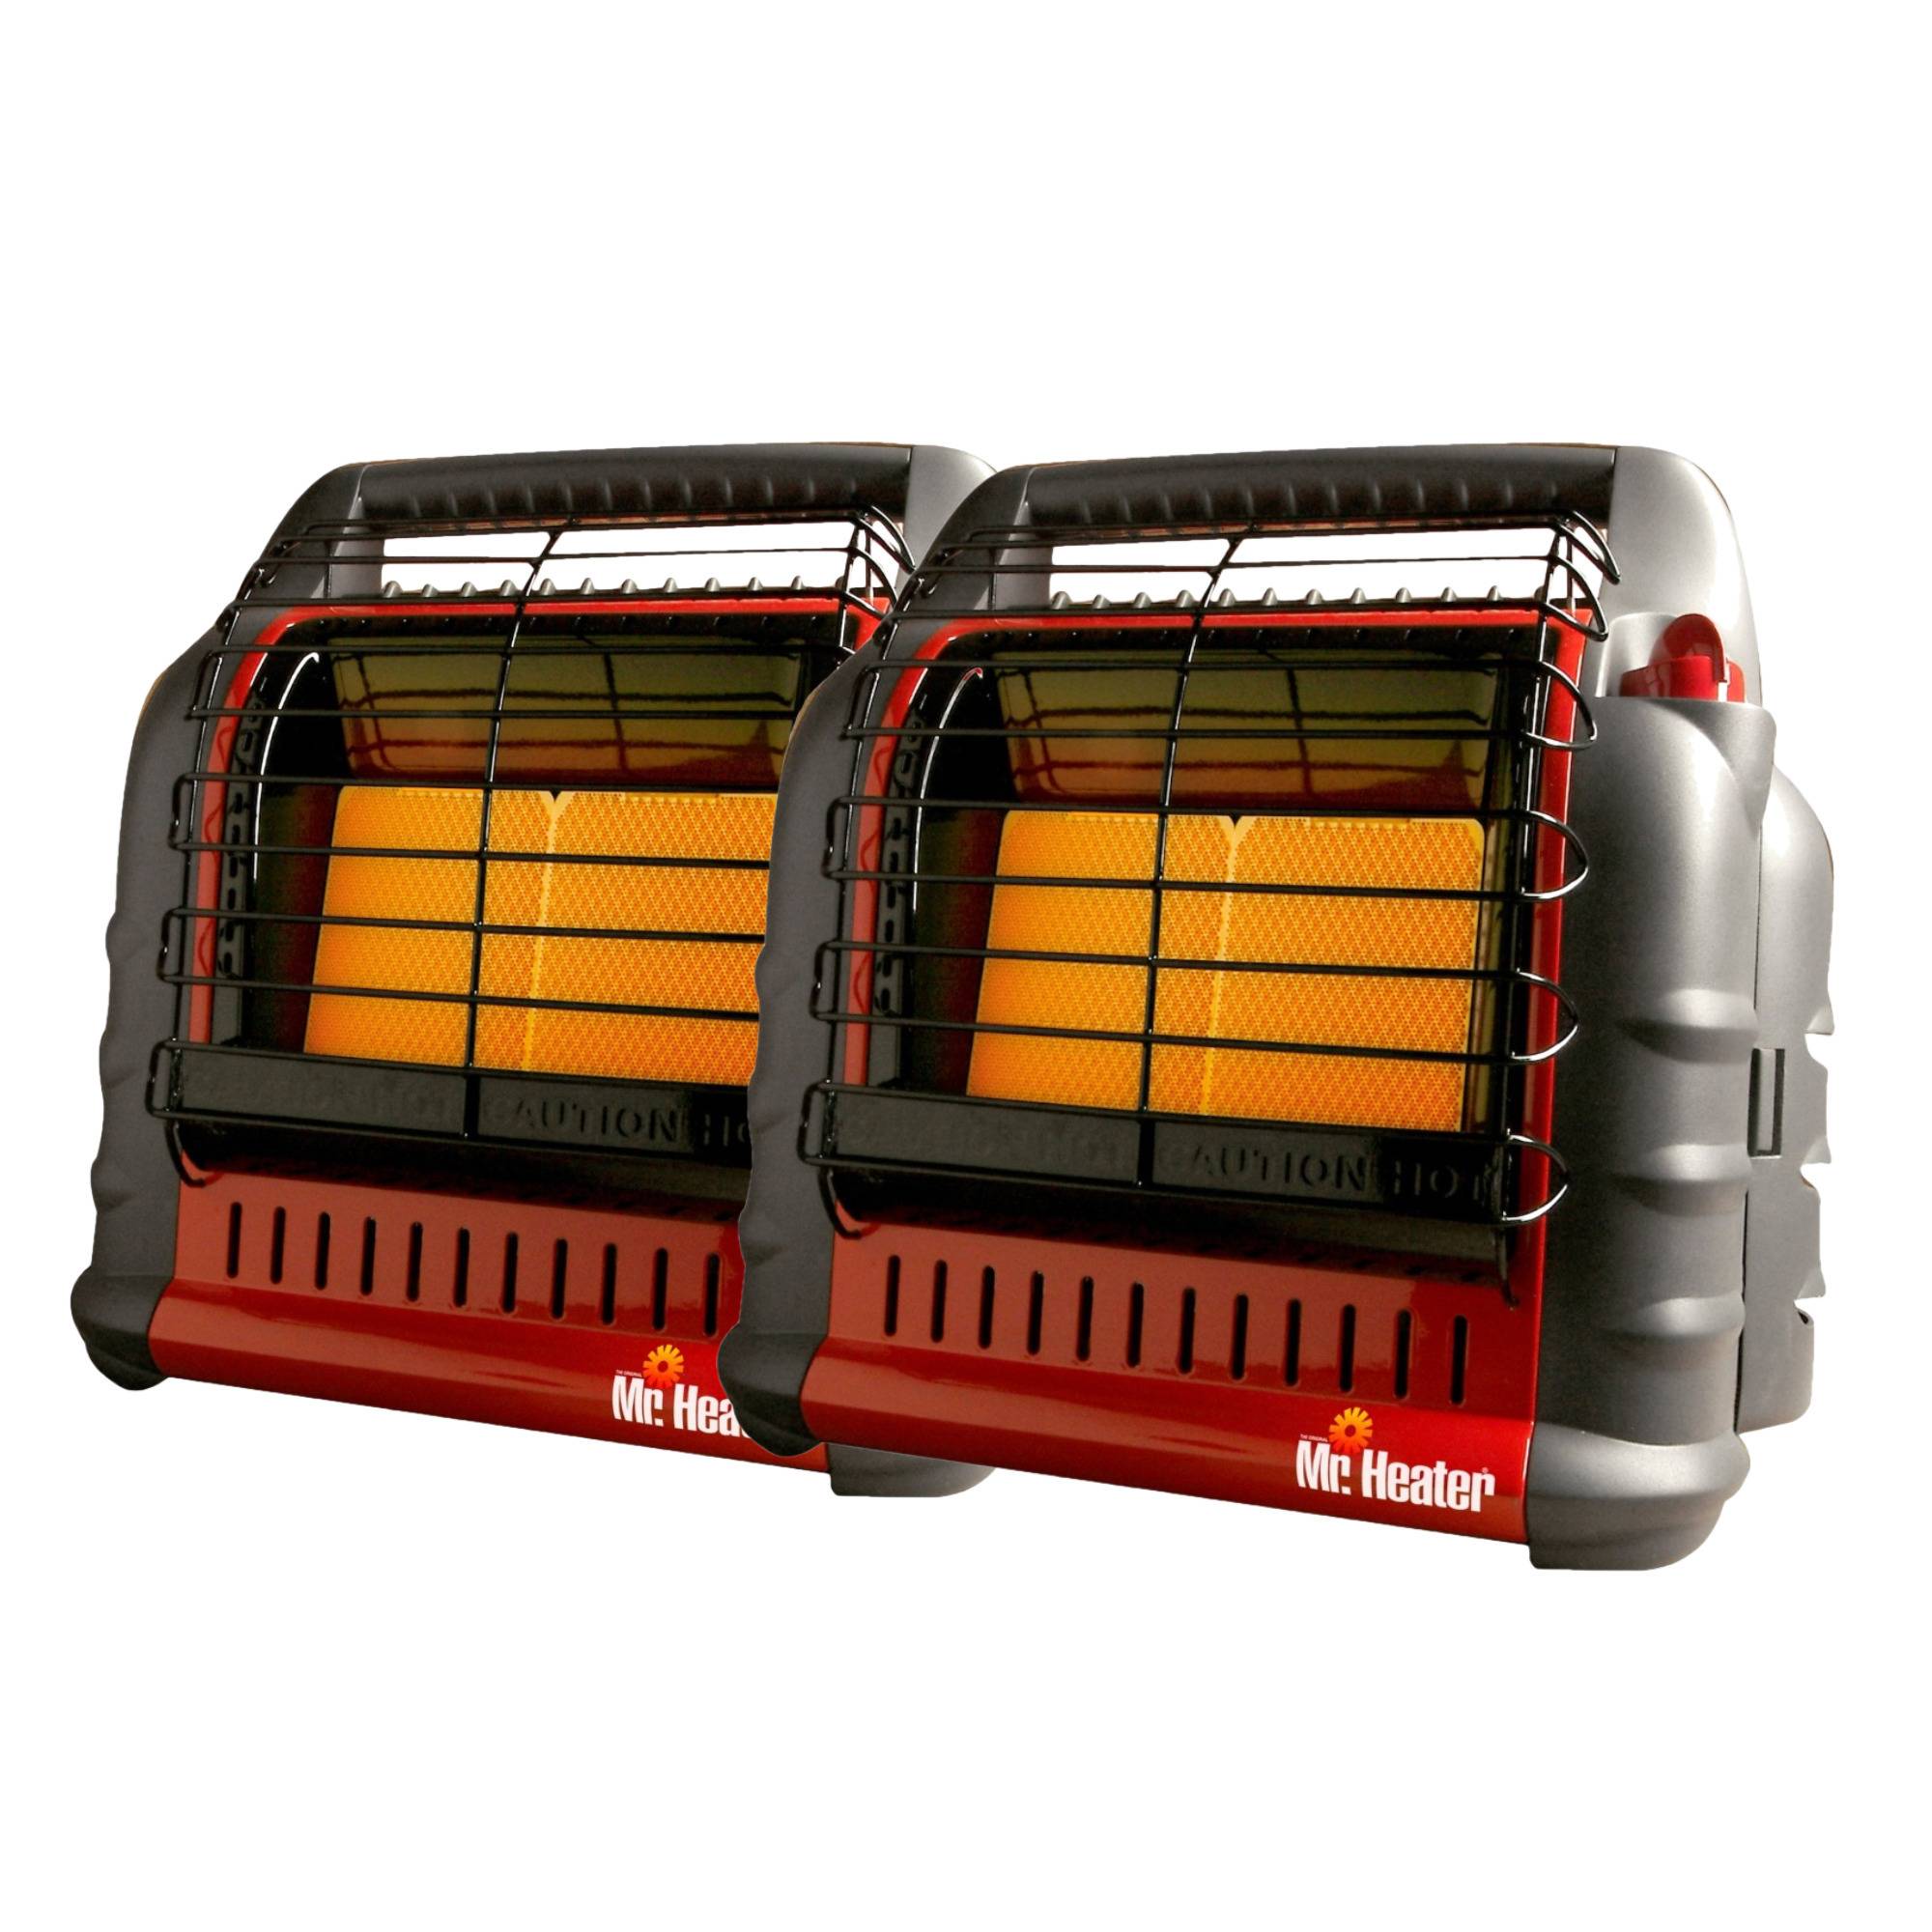 Mr. Heater F274805 Big Buddy Propane Heater (2-Pack)